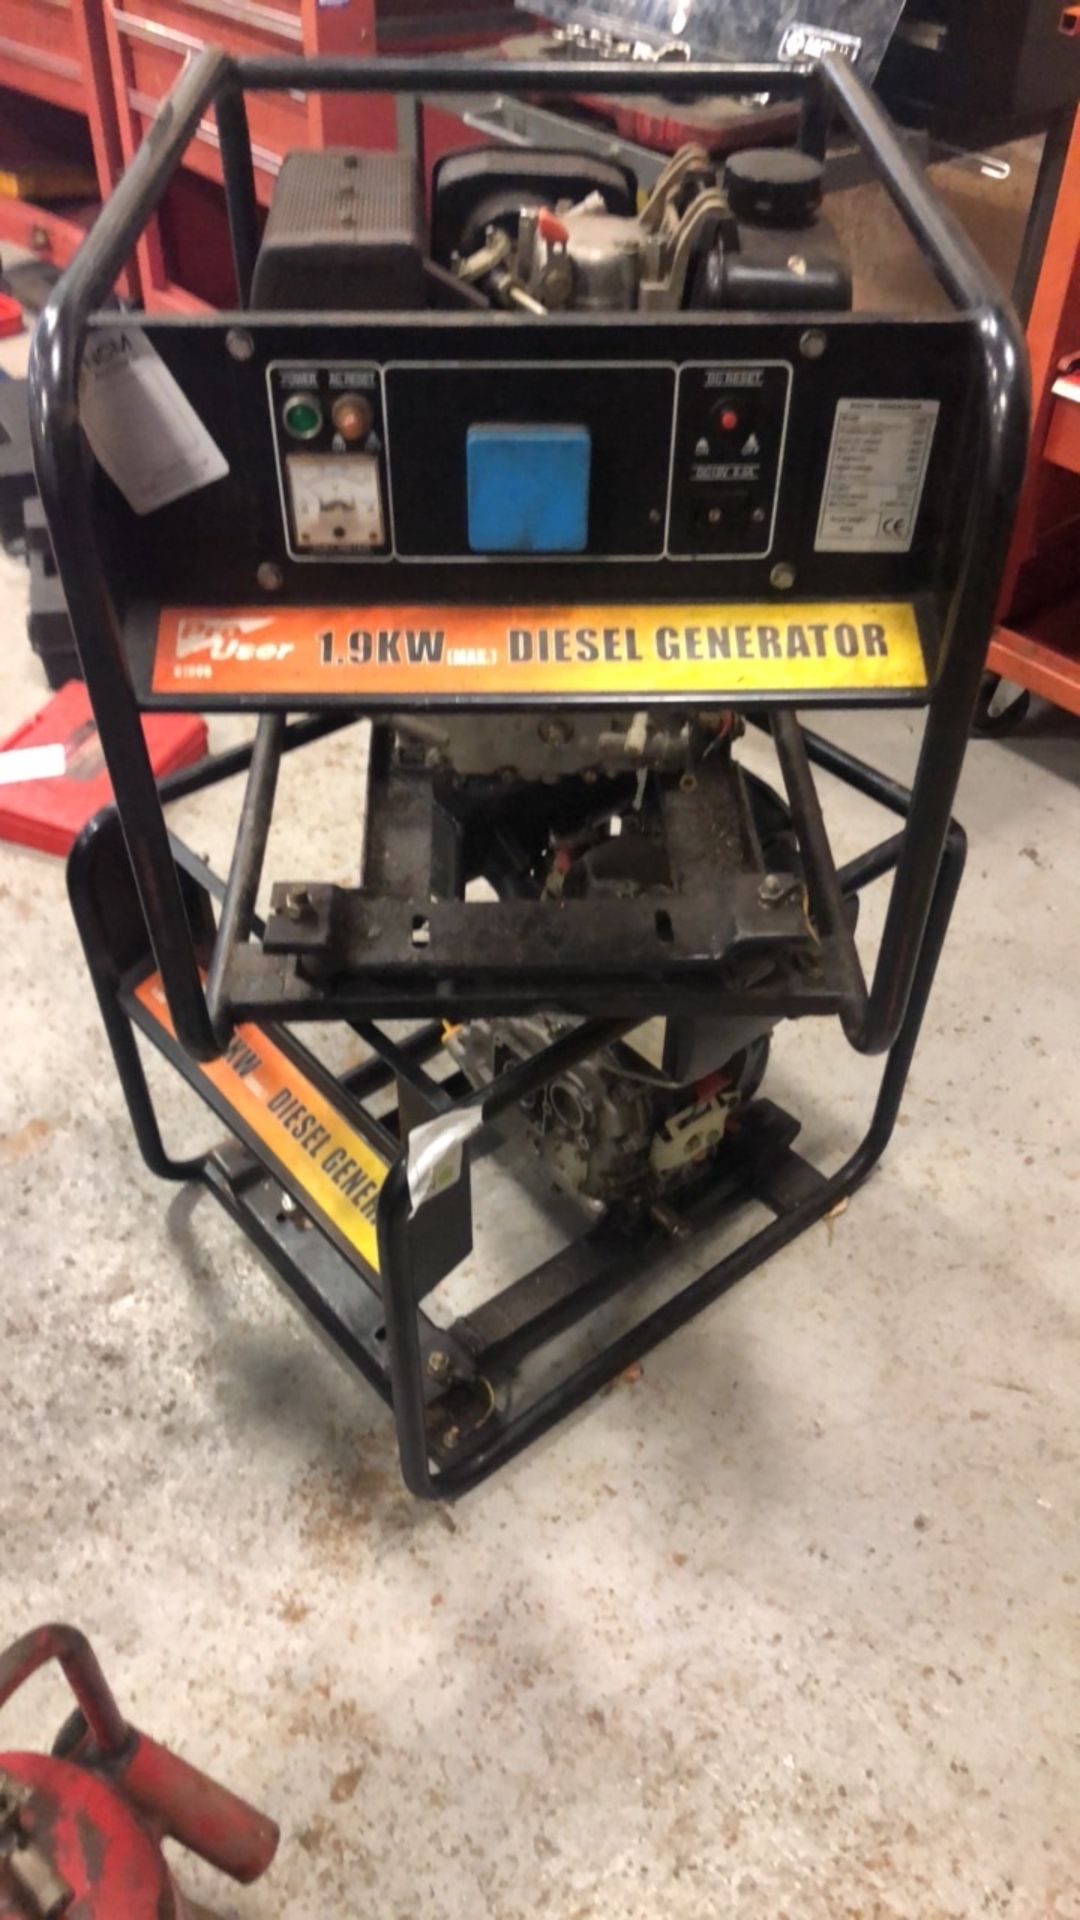 Pro user diesel generators